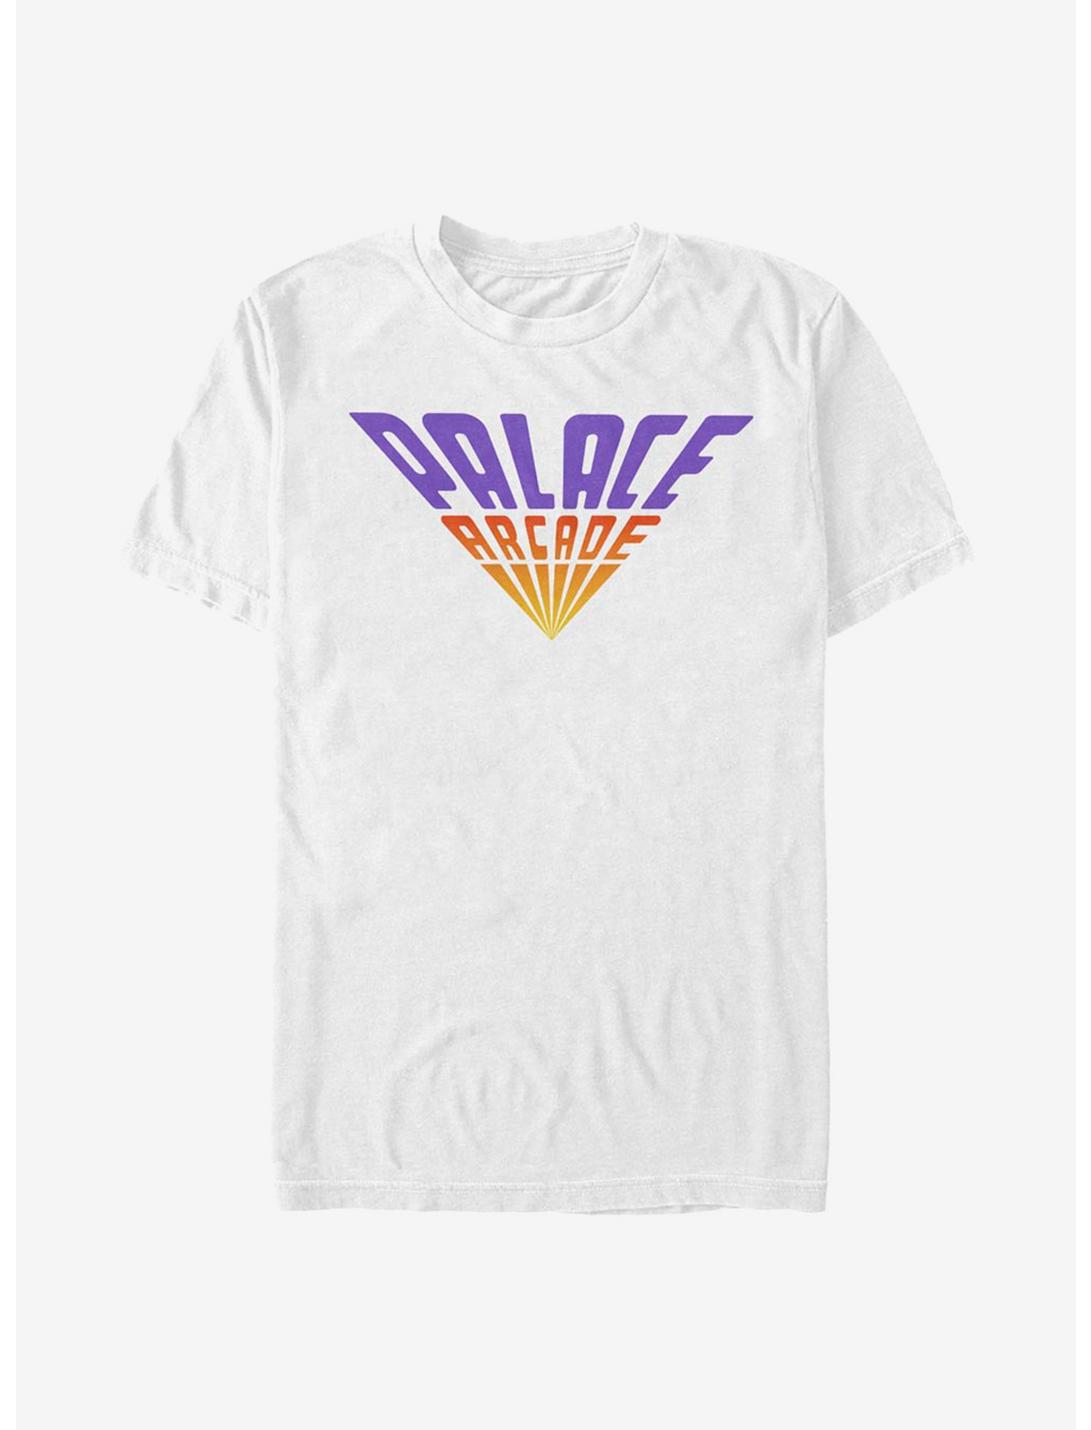 Stranger Things Palace Arcade T-Shirt, WHITE, hi-res